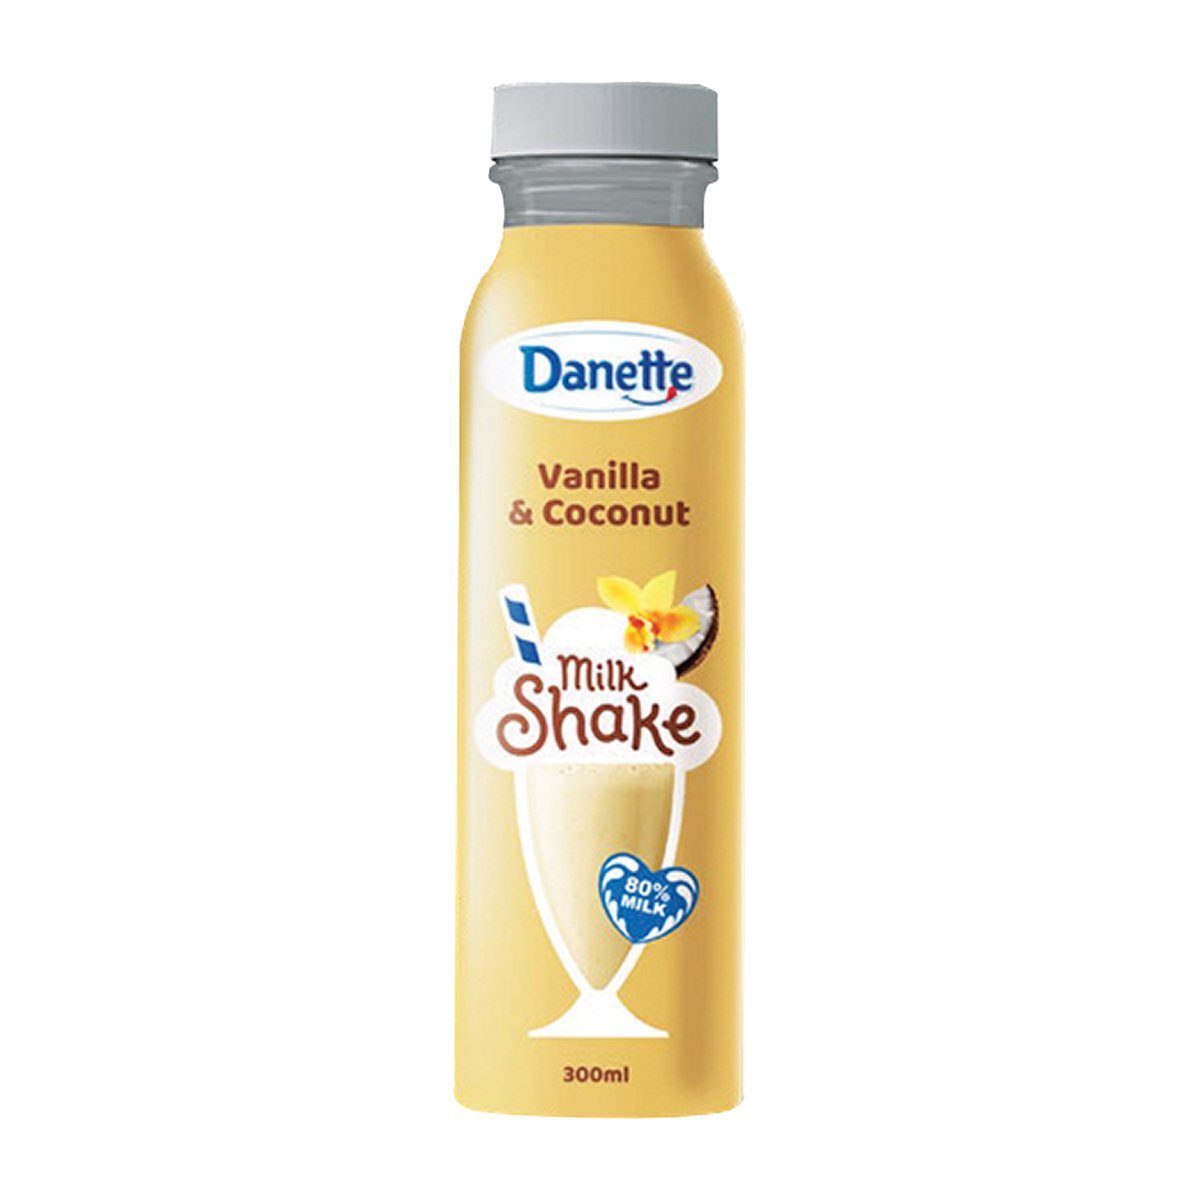 Danette Vanilla & Coconut Milk Shake 300 ml